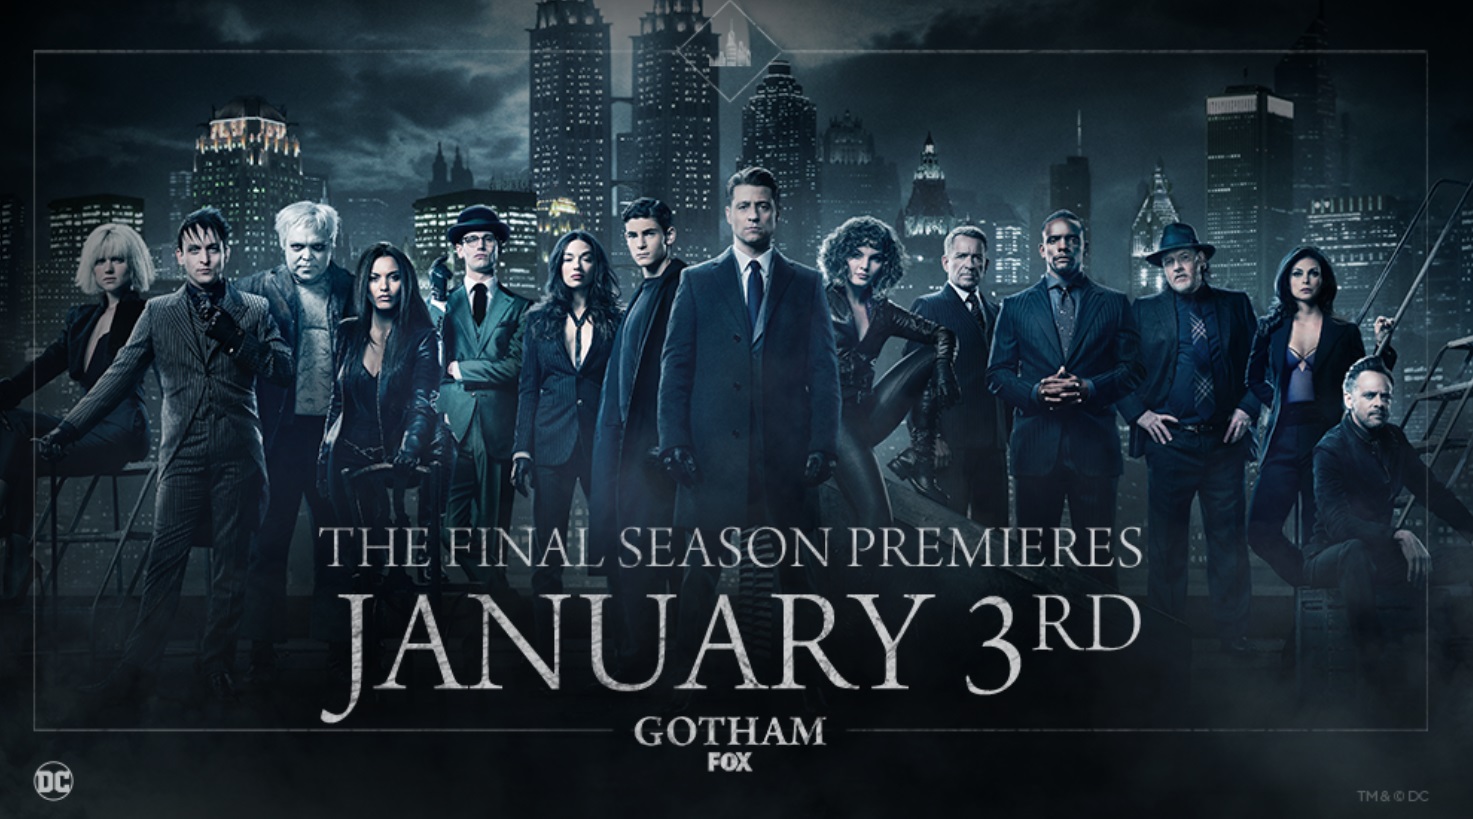 Gotham Season 5 premiere January 2019